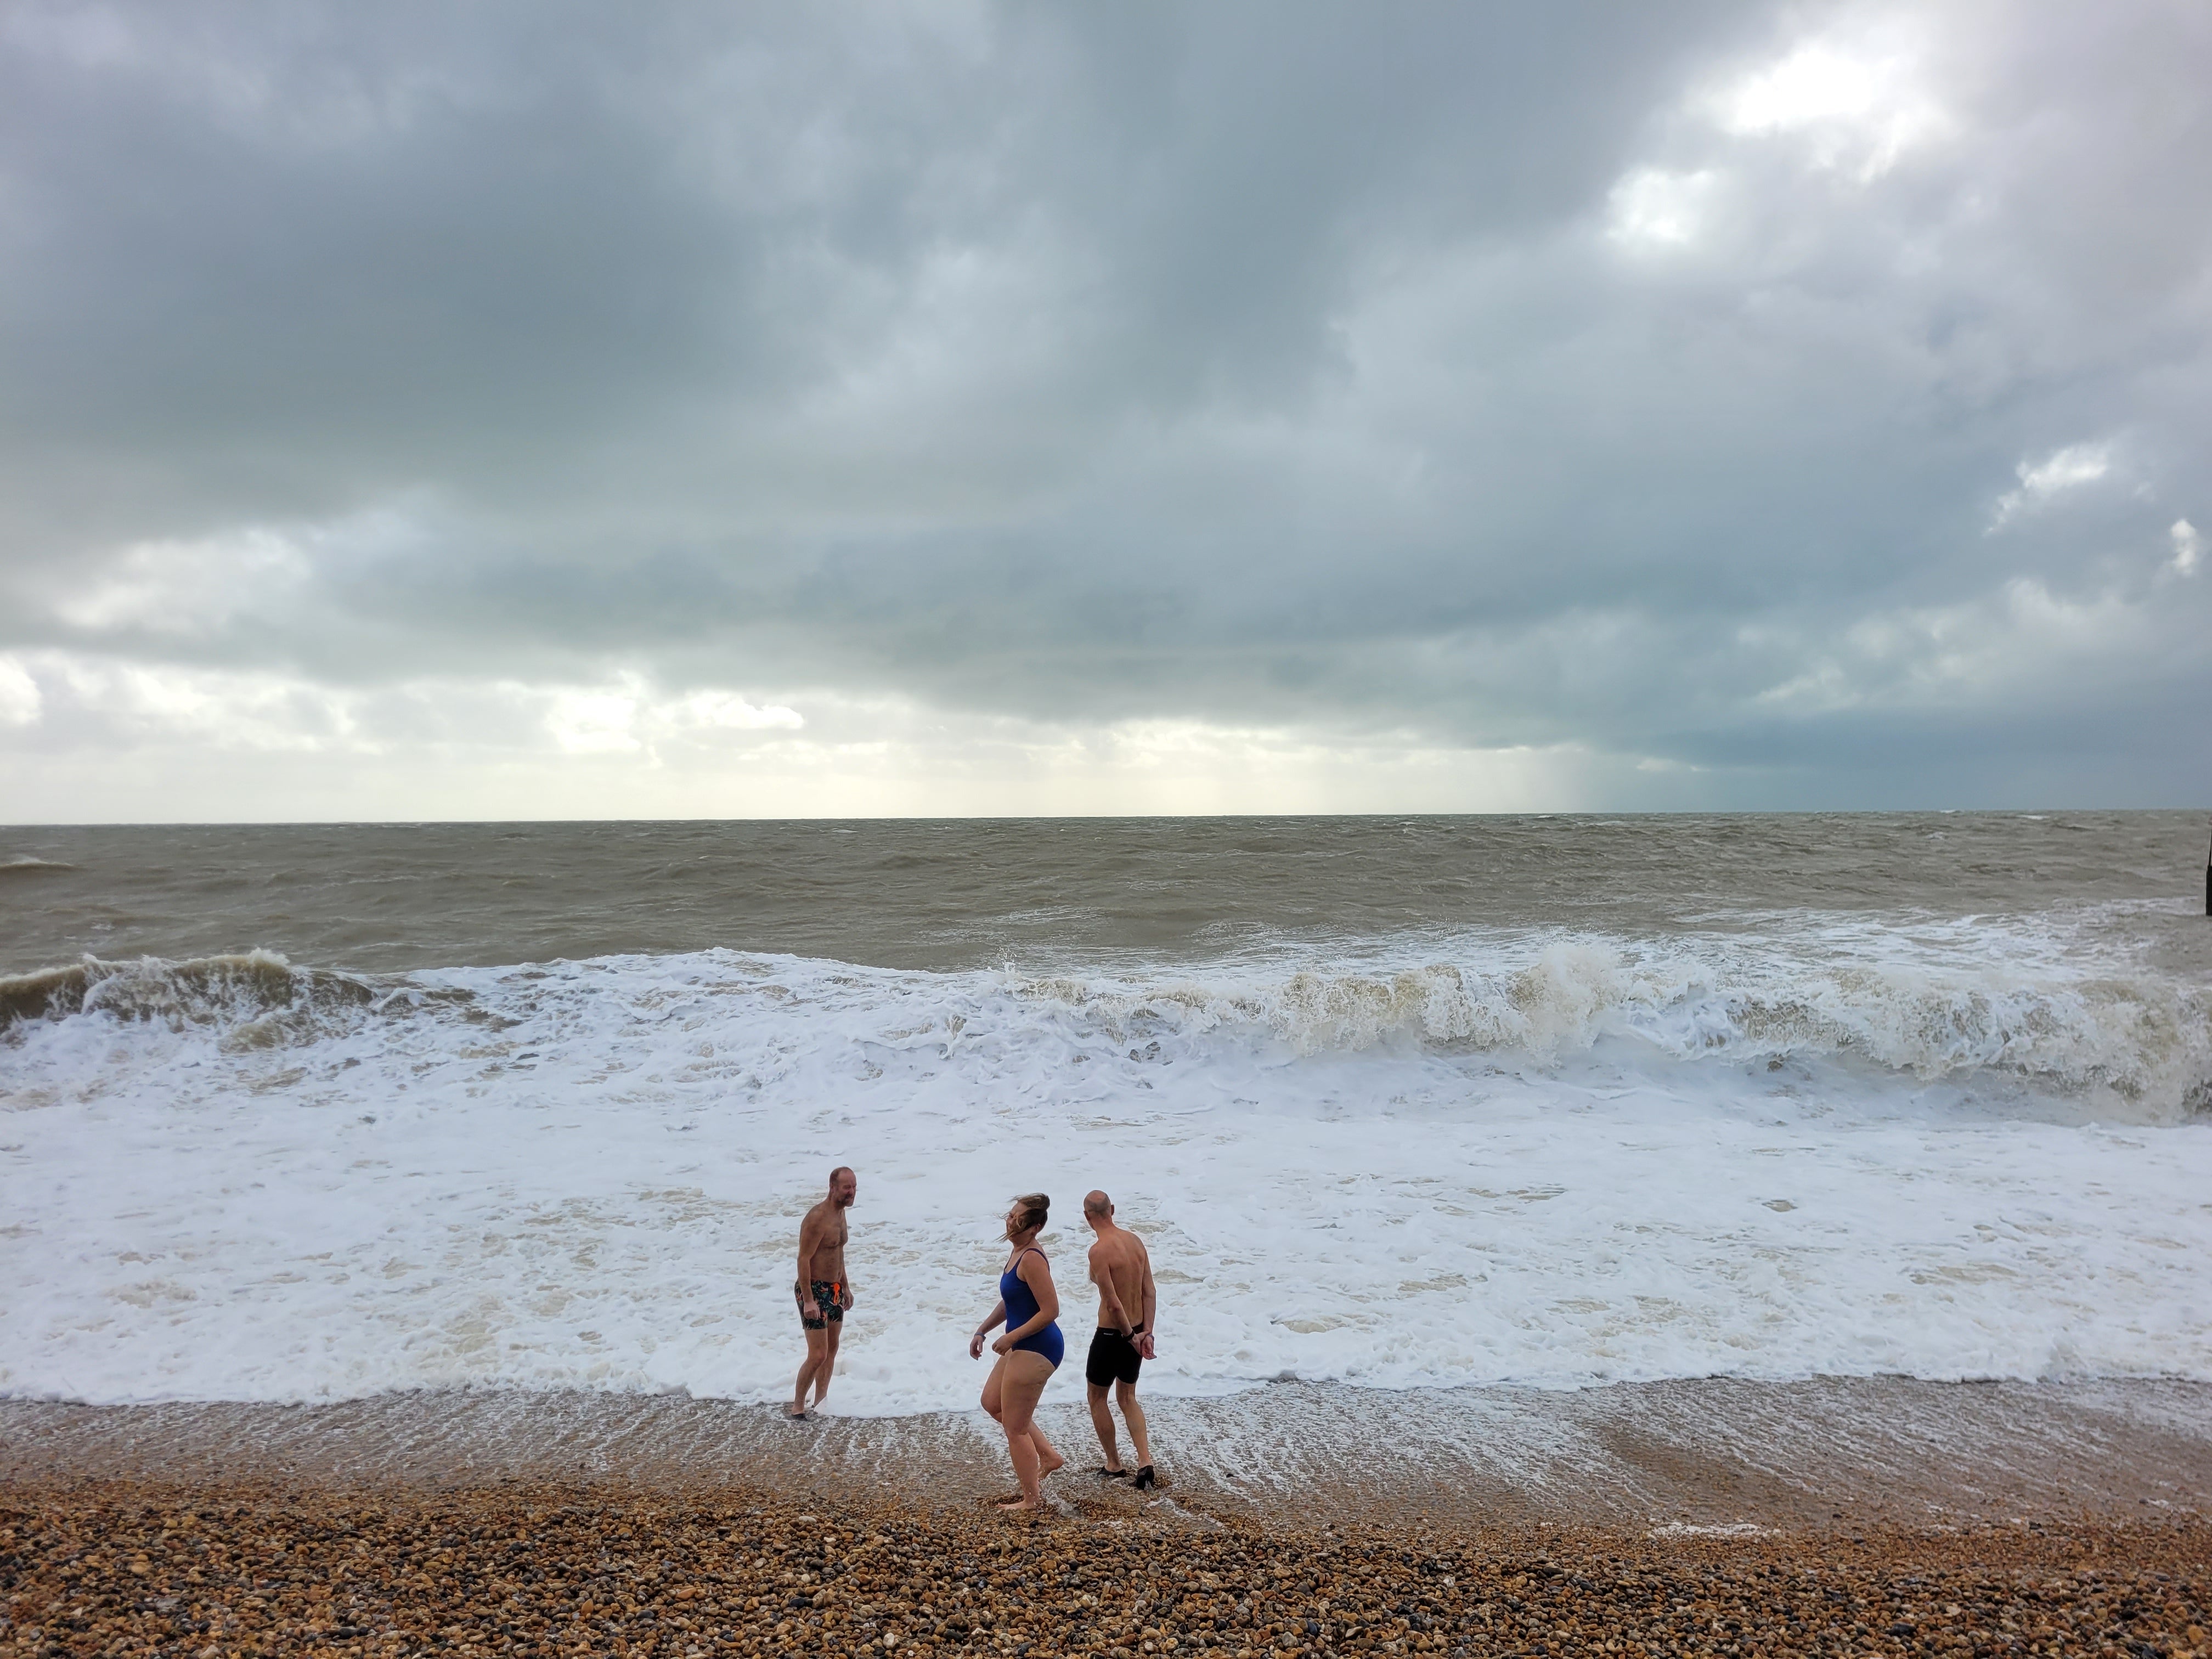 Winter swimming has taken off in seaside communities around the UK